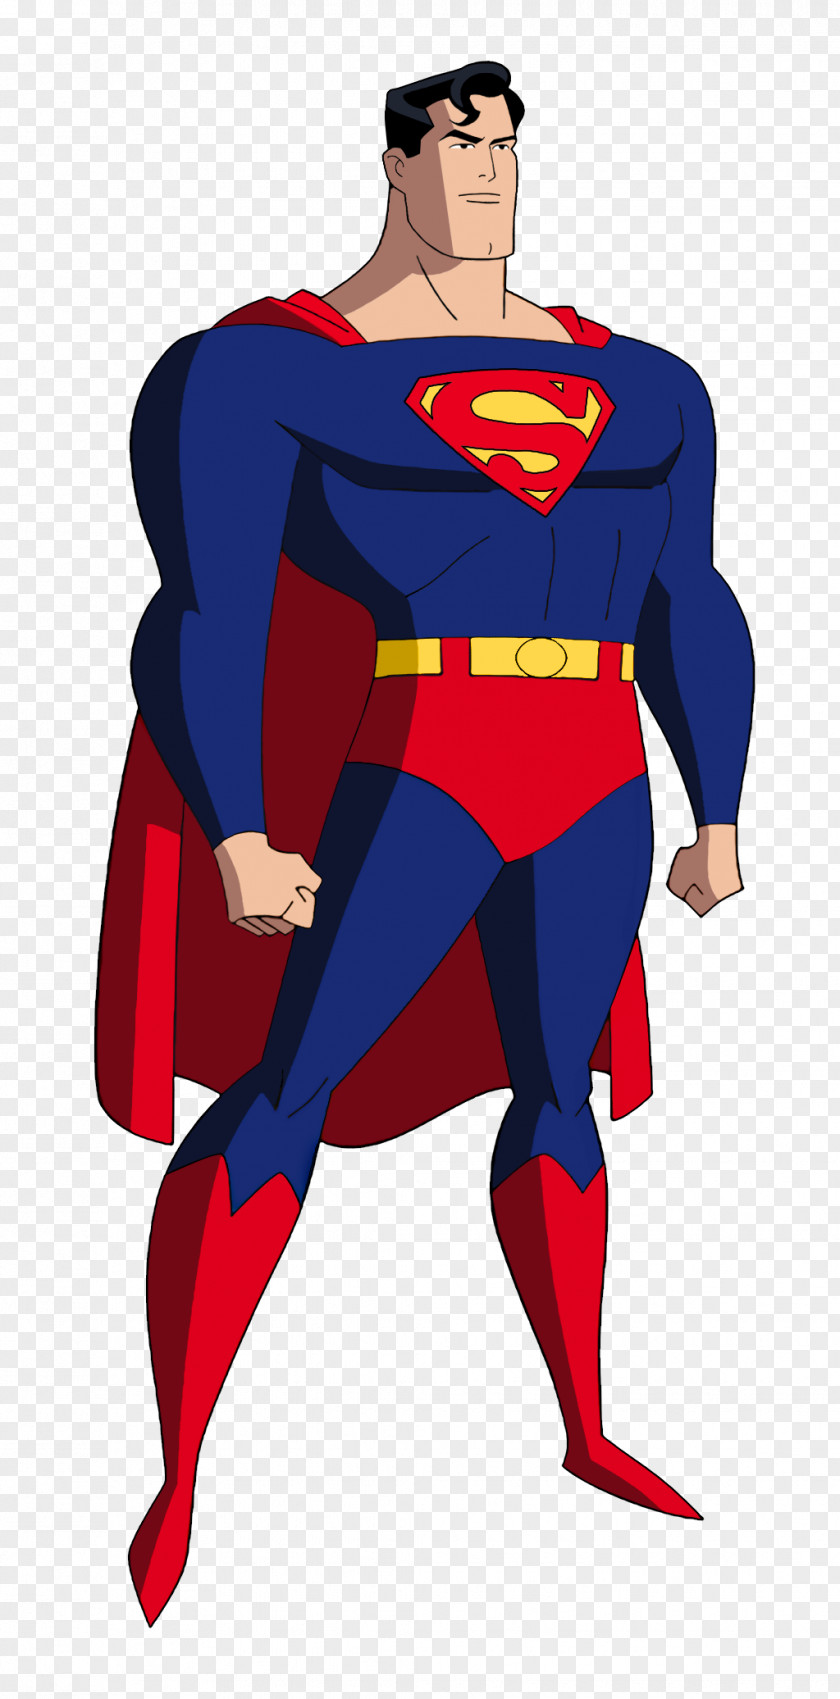 Cartoon Superman Fleischer Studios DC Animated Universe PNG